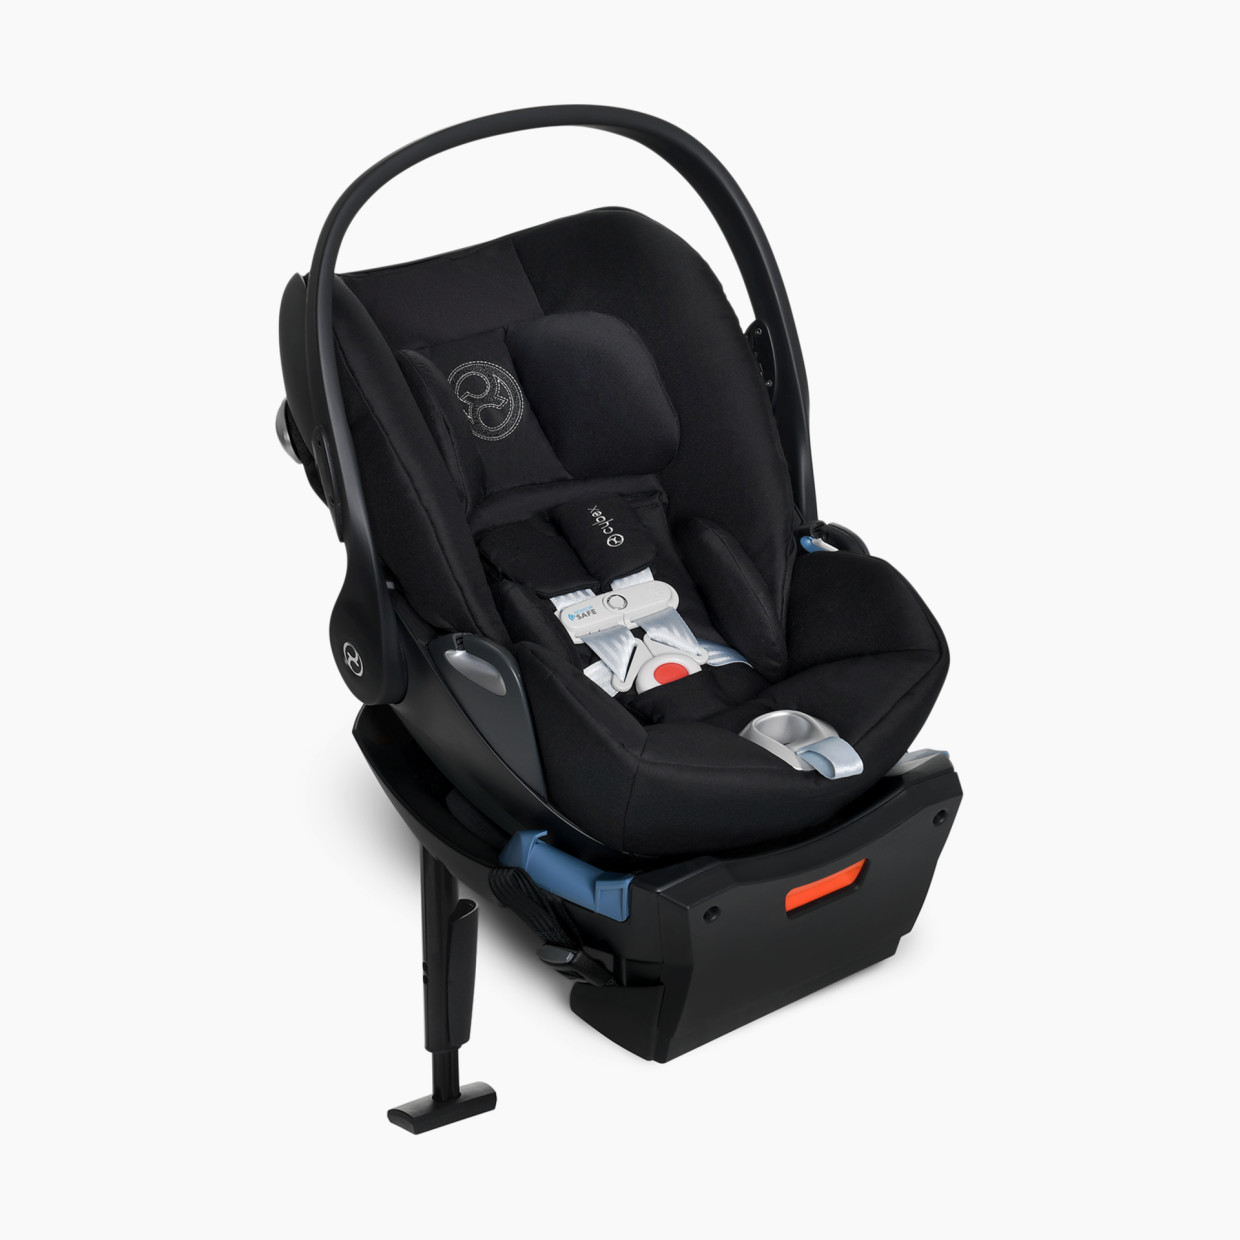 Cybex Cloud Q SensorSafe Infant Car Seat - Stardust Black.